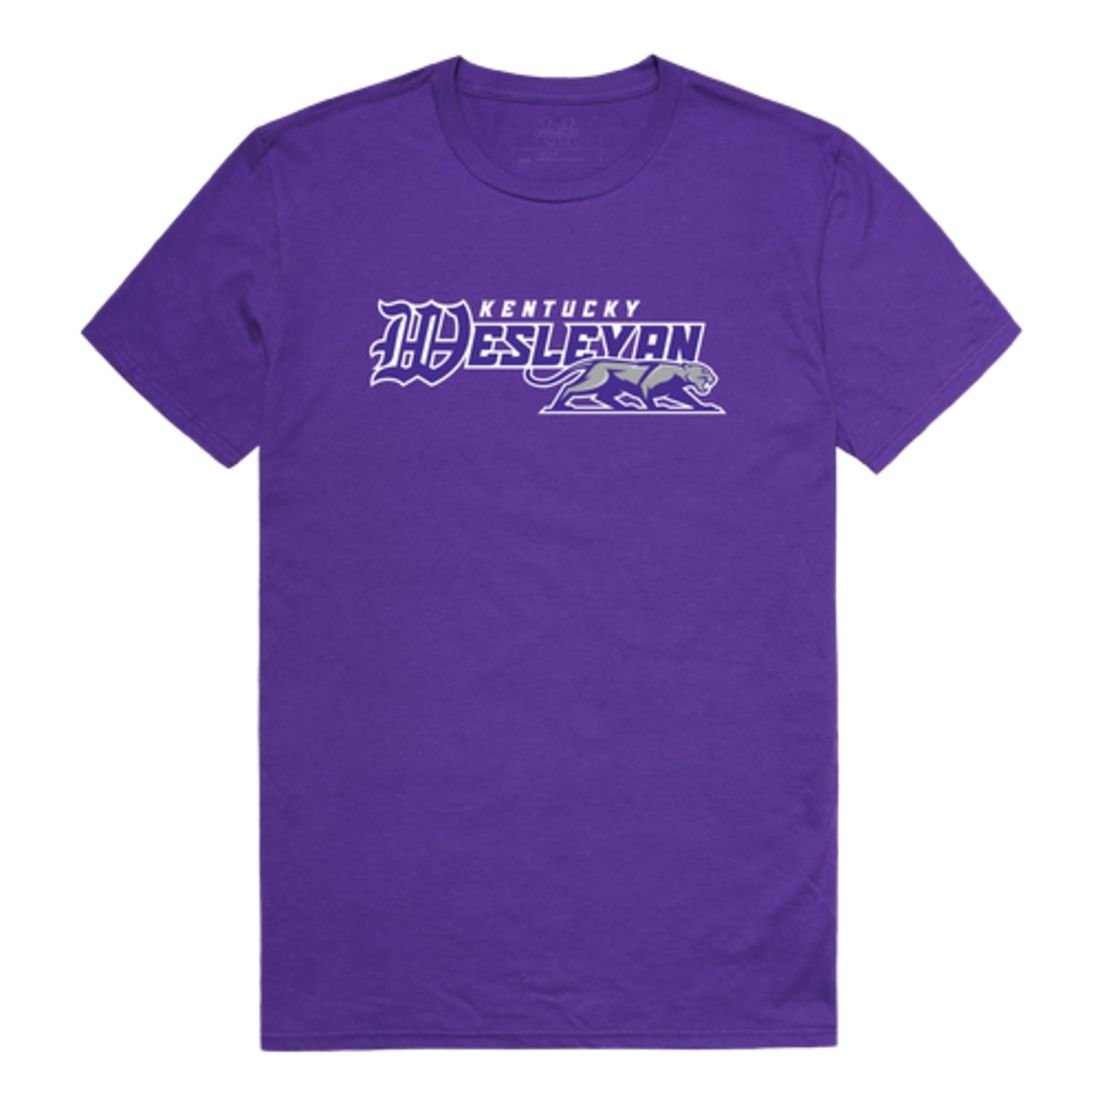 Kentucky Wesleyan College Panthers The Freshmen T-Shirt Tee